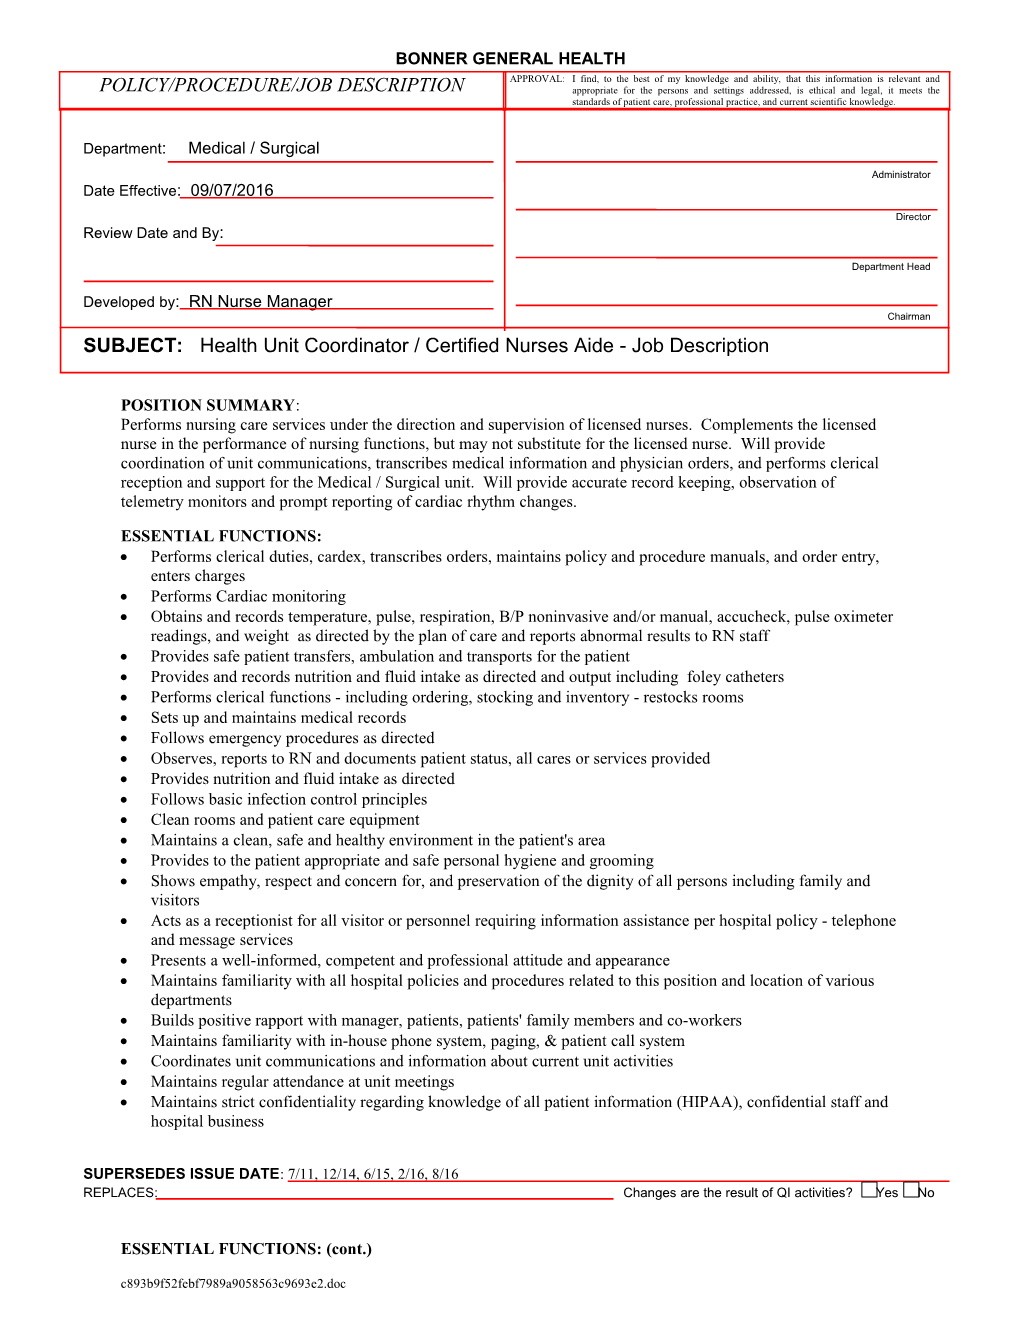 Subject:Medical / Surgical HUC / CNA - Job Description